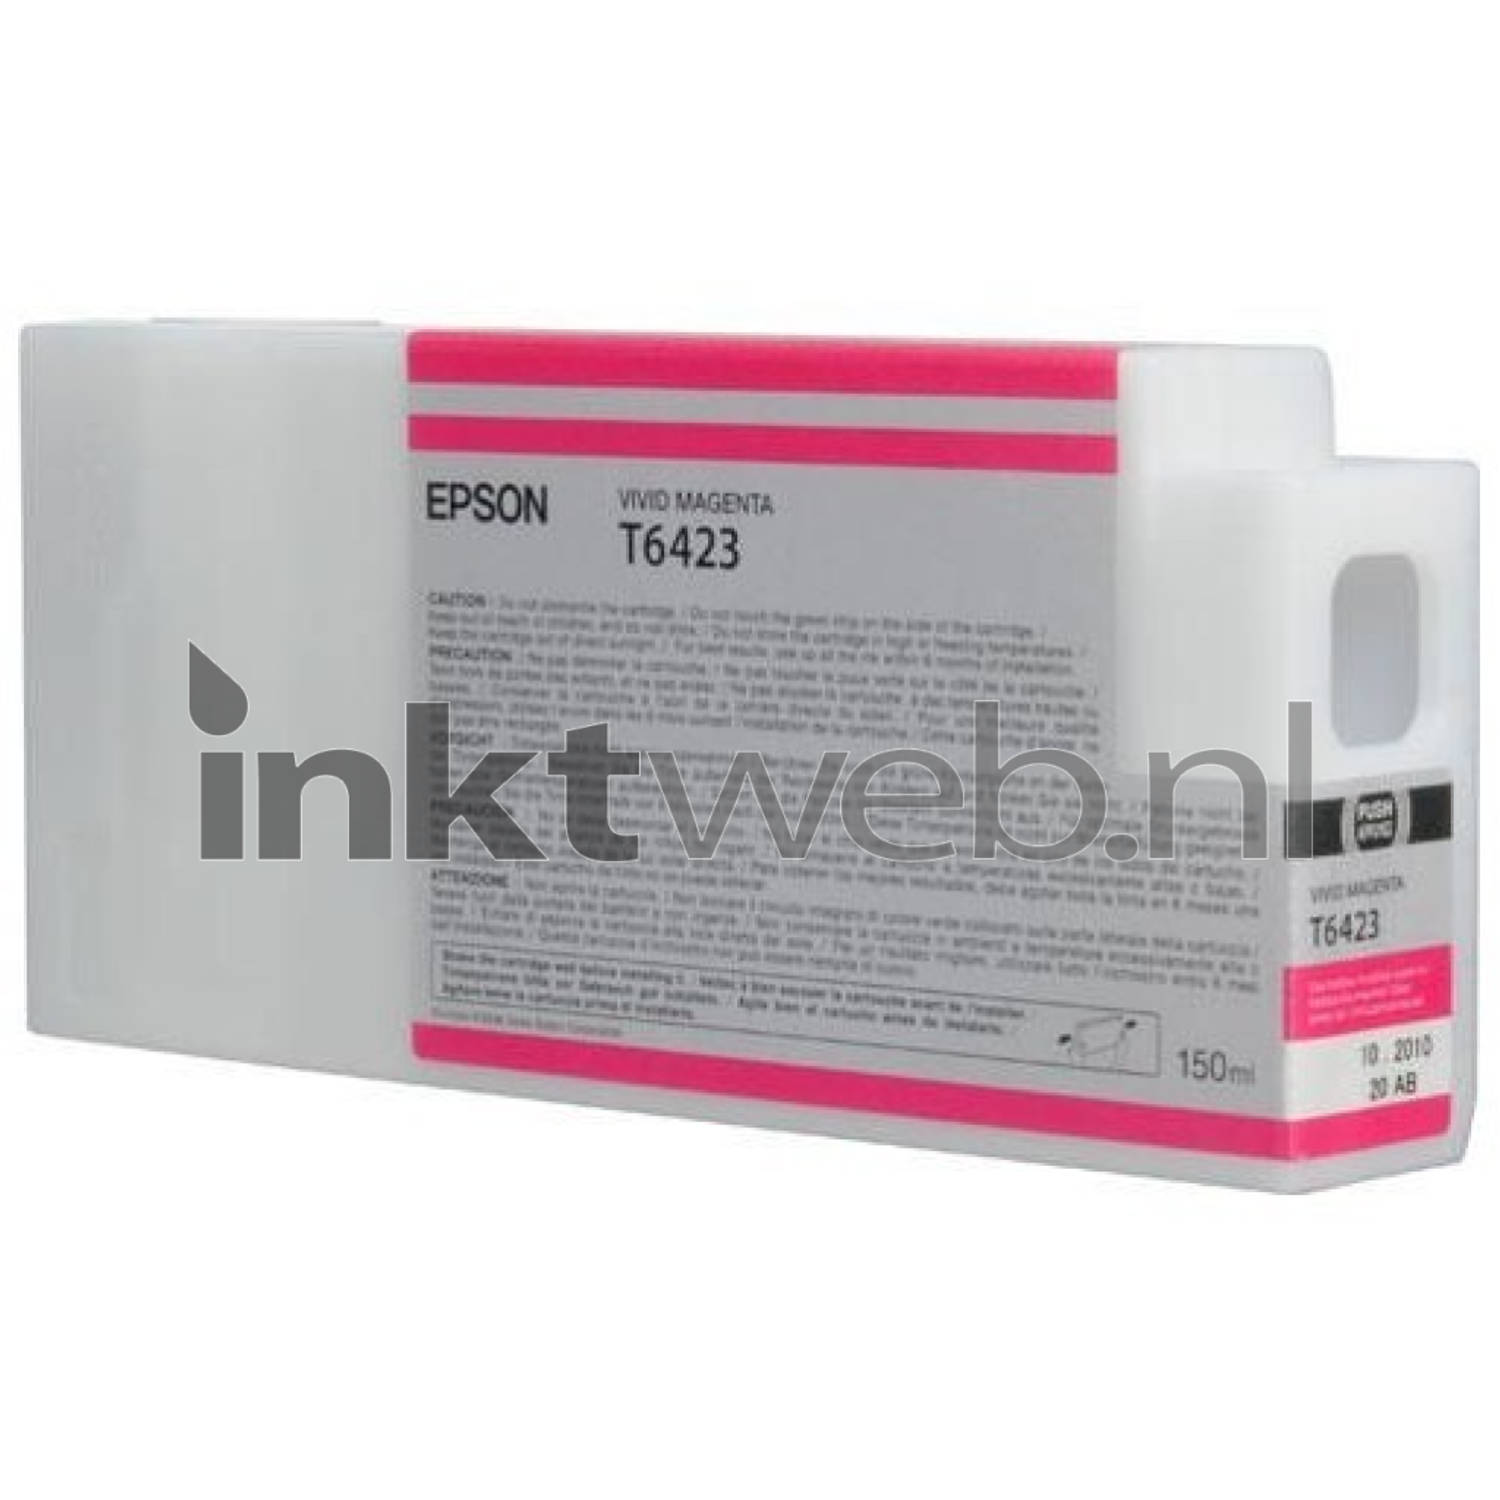 Epson C13T642300 Inktcartridge Vivid Magenta